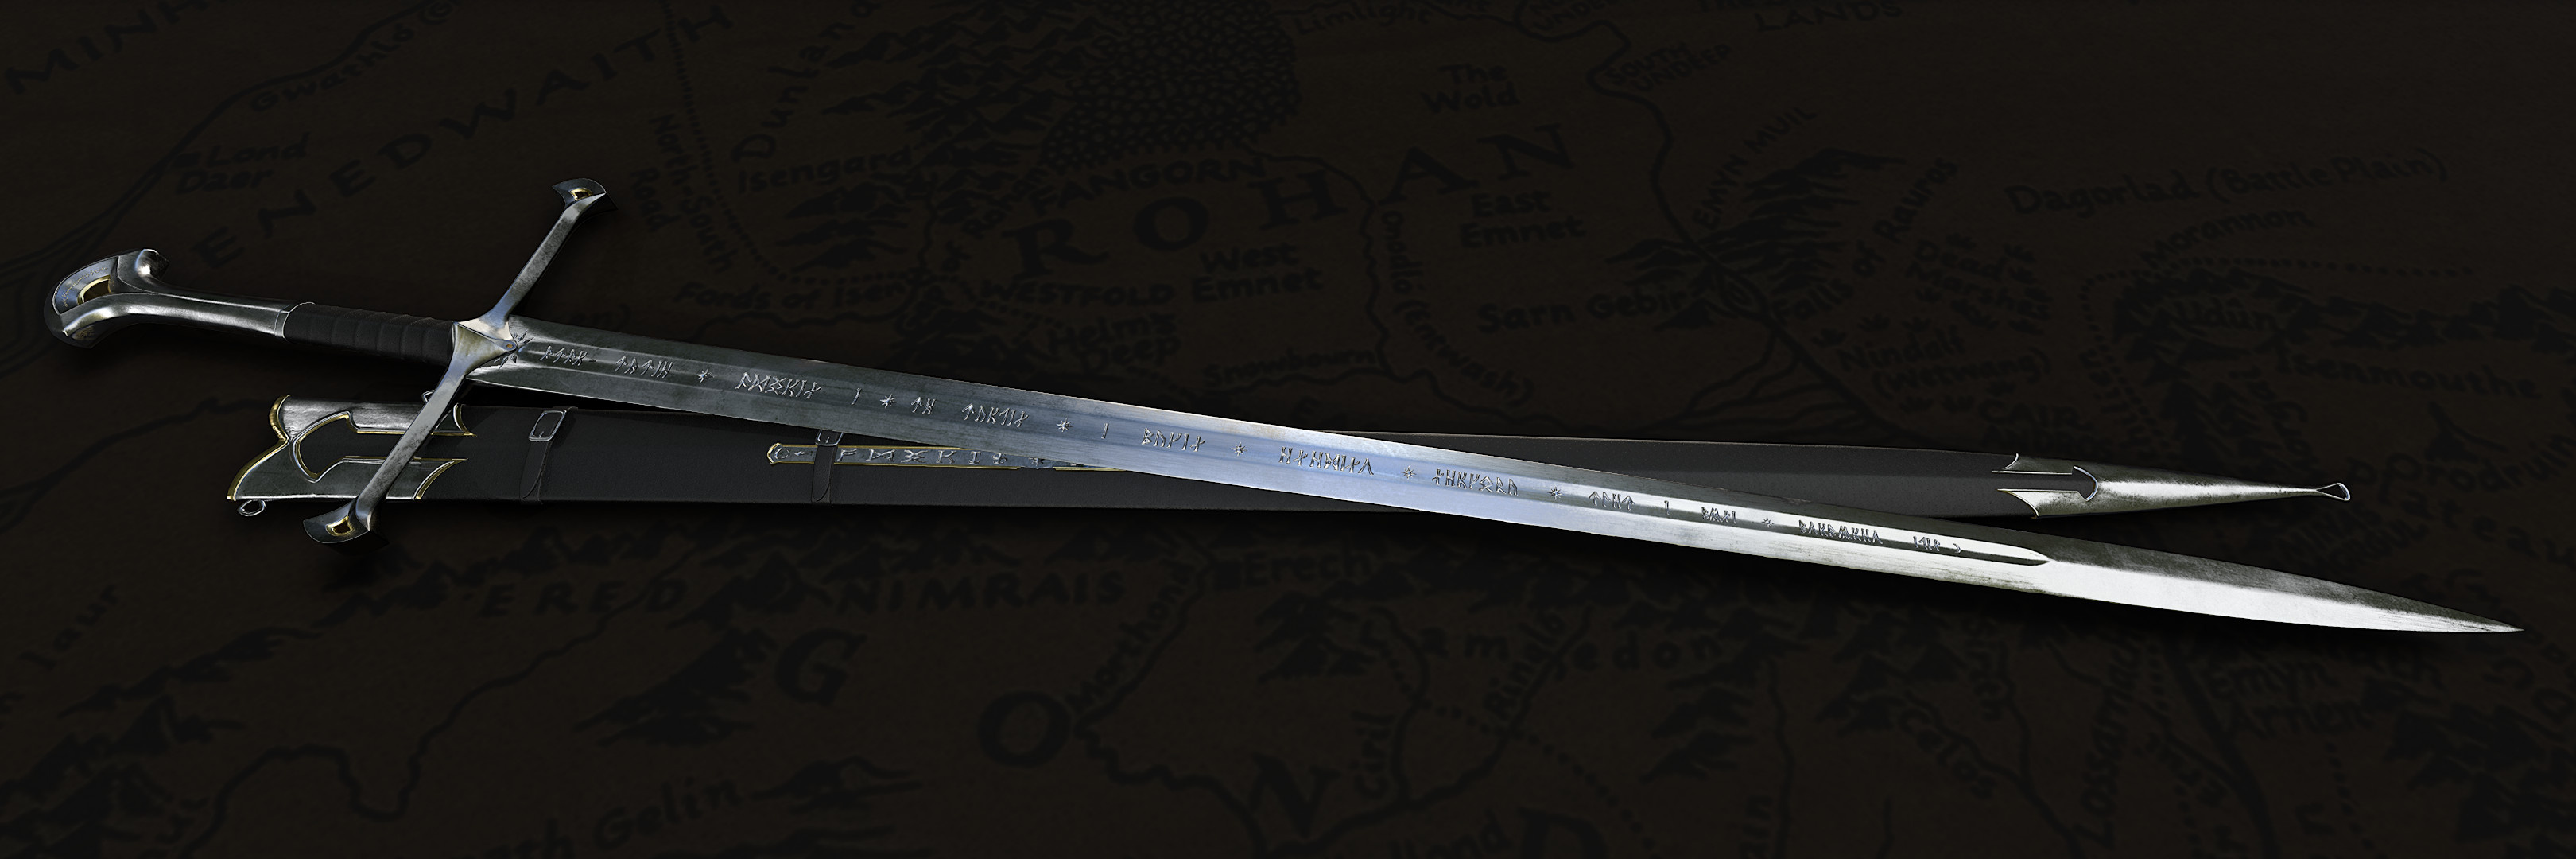 Anduril Sword, Artwork by Alex Templin, The Lord of the Rings, Sword design, 3240x1080 Dual Screen Desktop